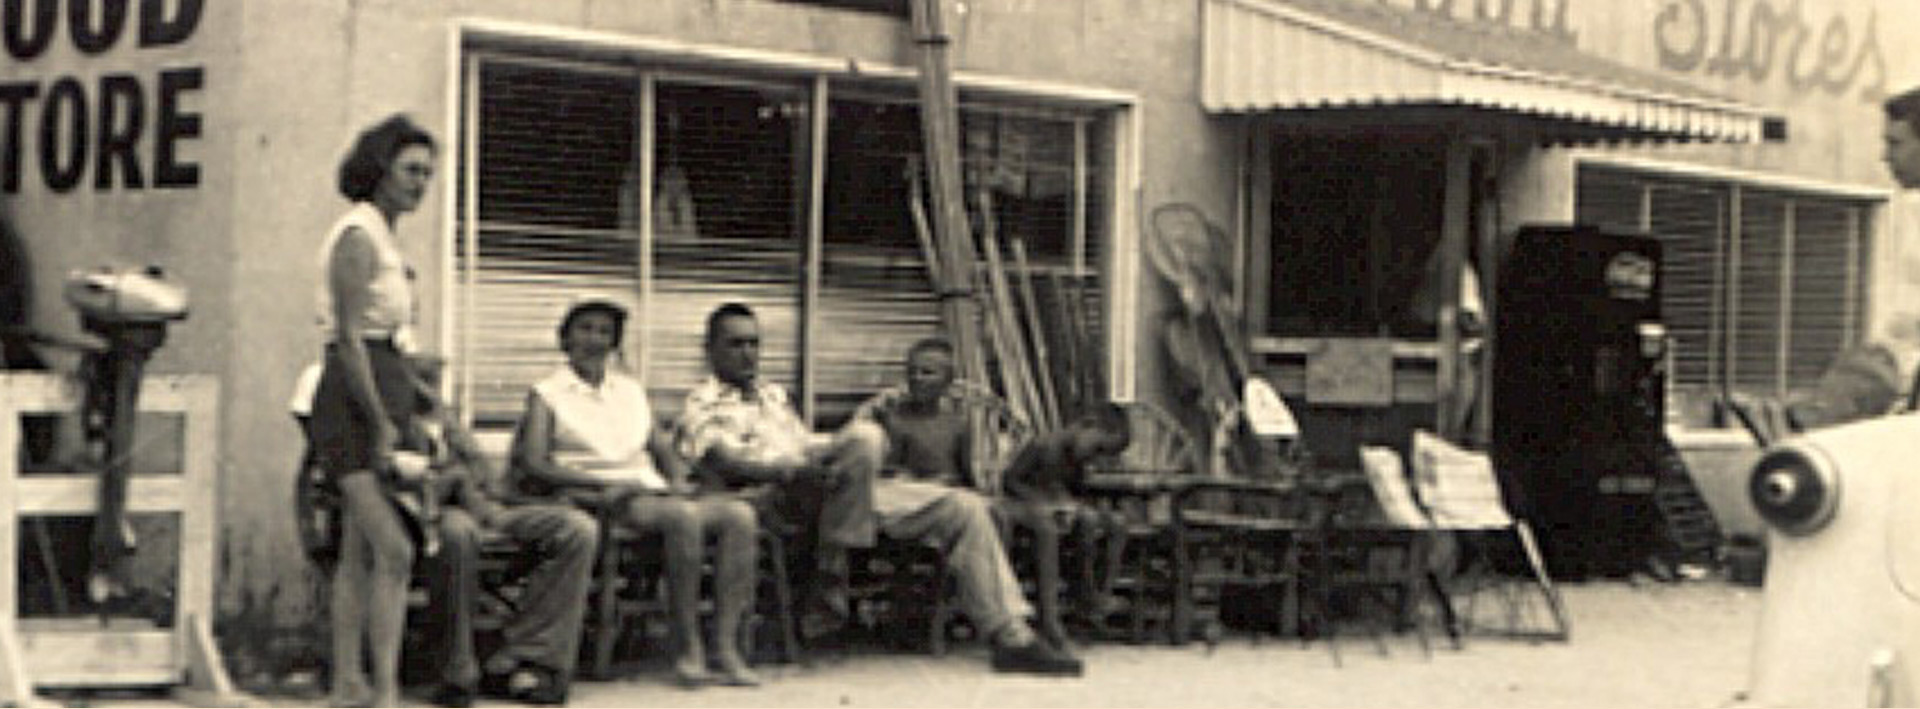 Boulineau's Store in 1950's